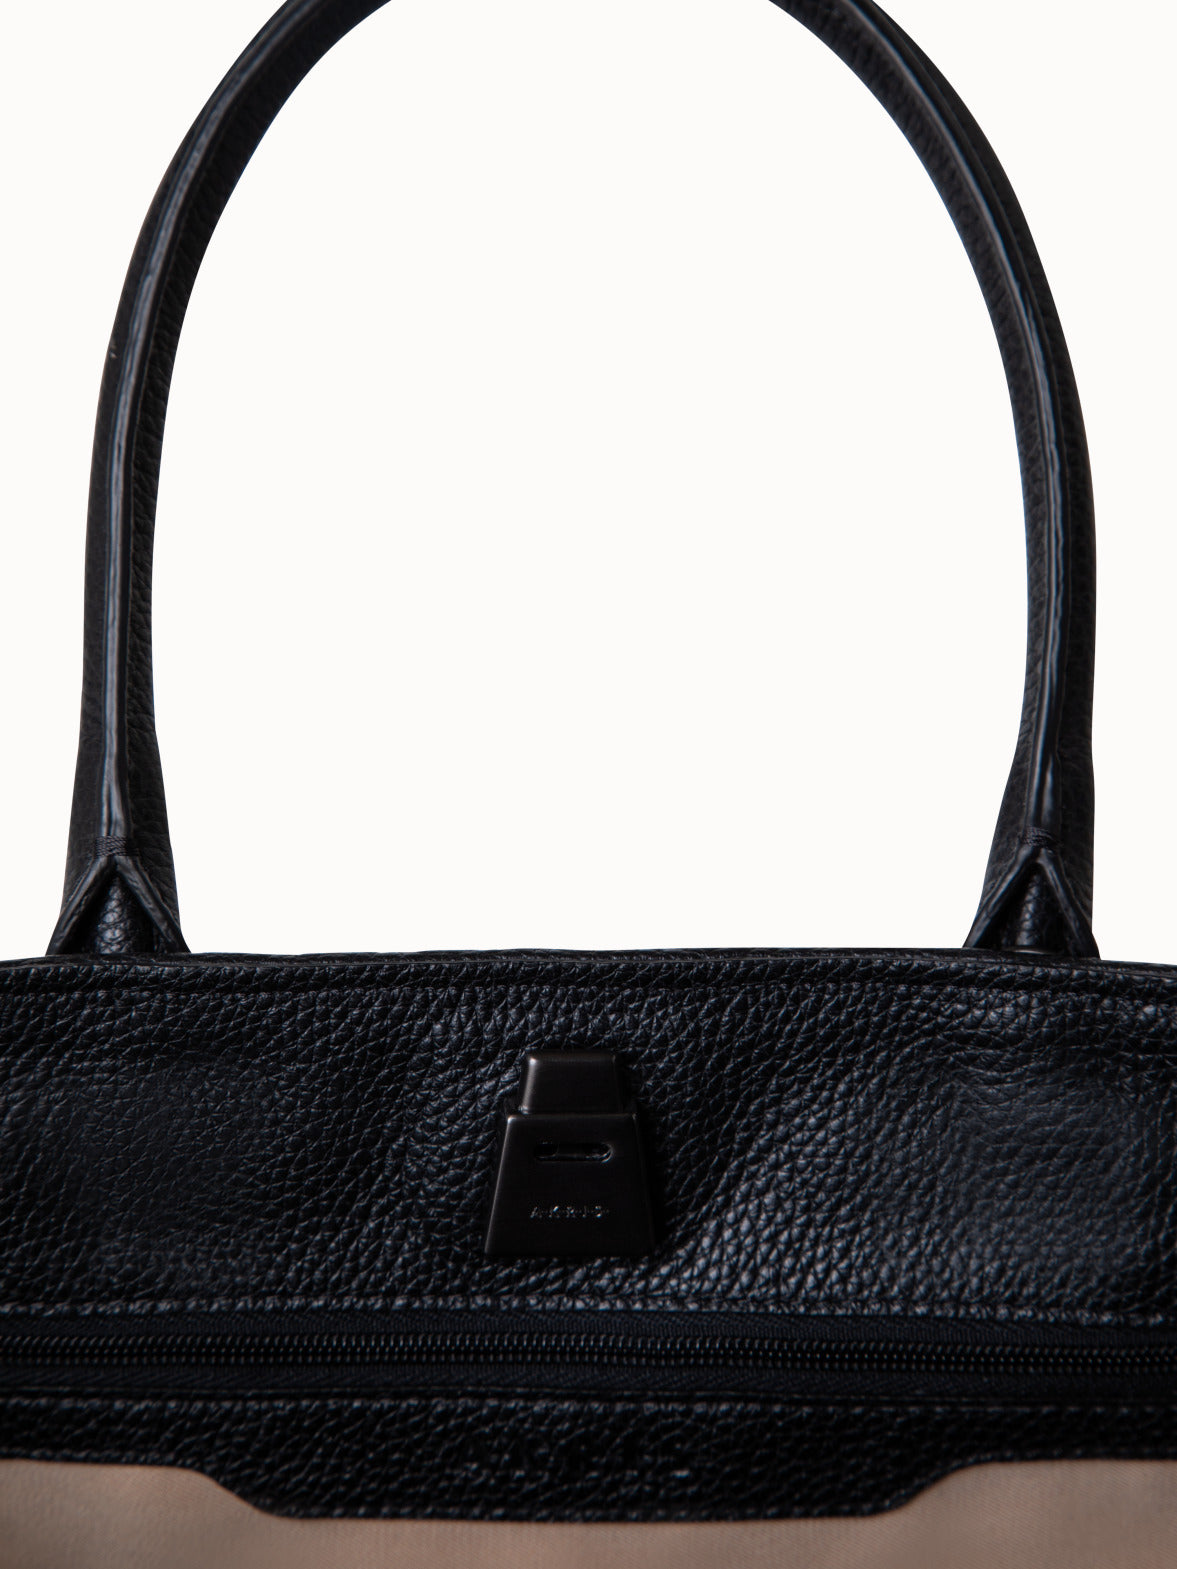 Prada Braided Handle Bag in Black